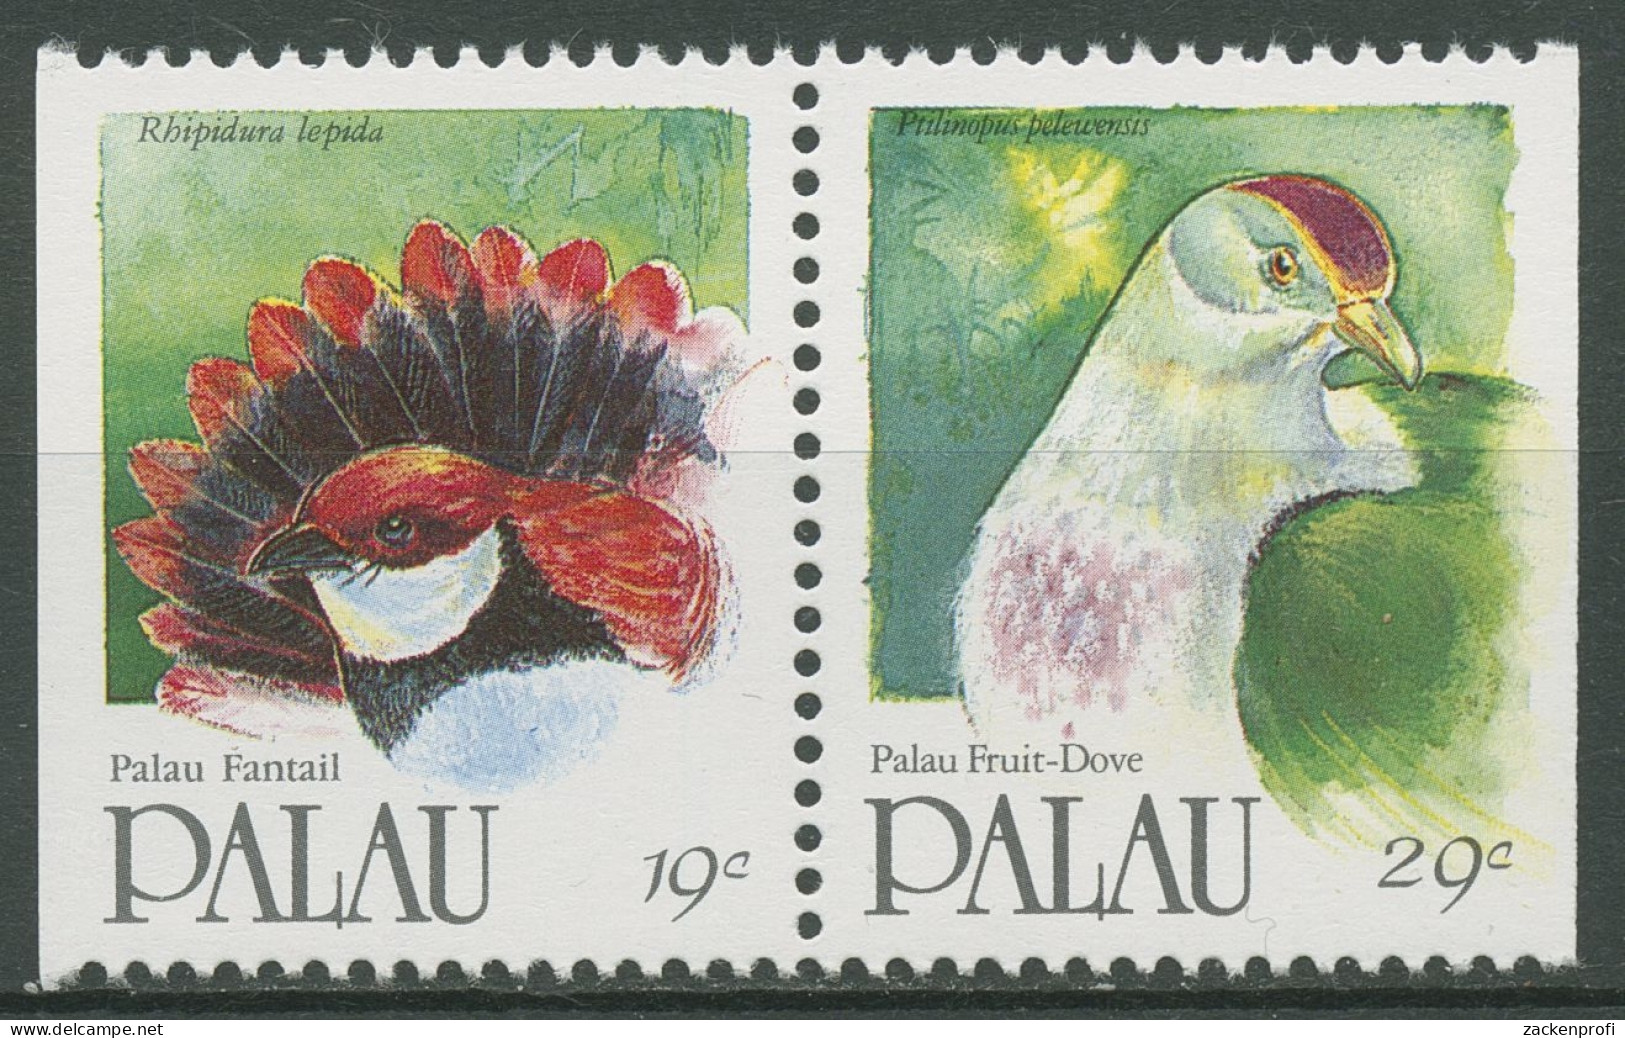 Palau 1991 Vögel Fächerschwanz Fruchttaube 428 + 430 D Postfrisch - Palau